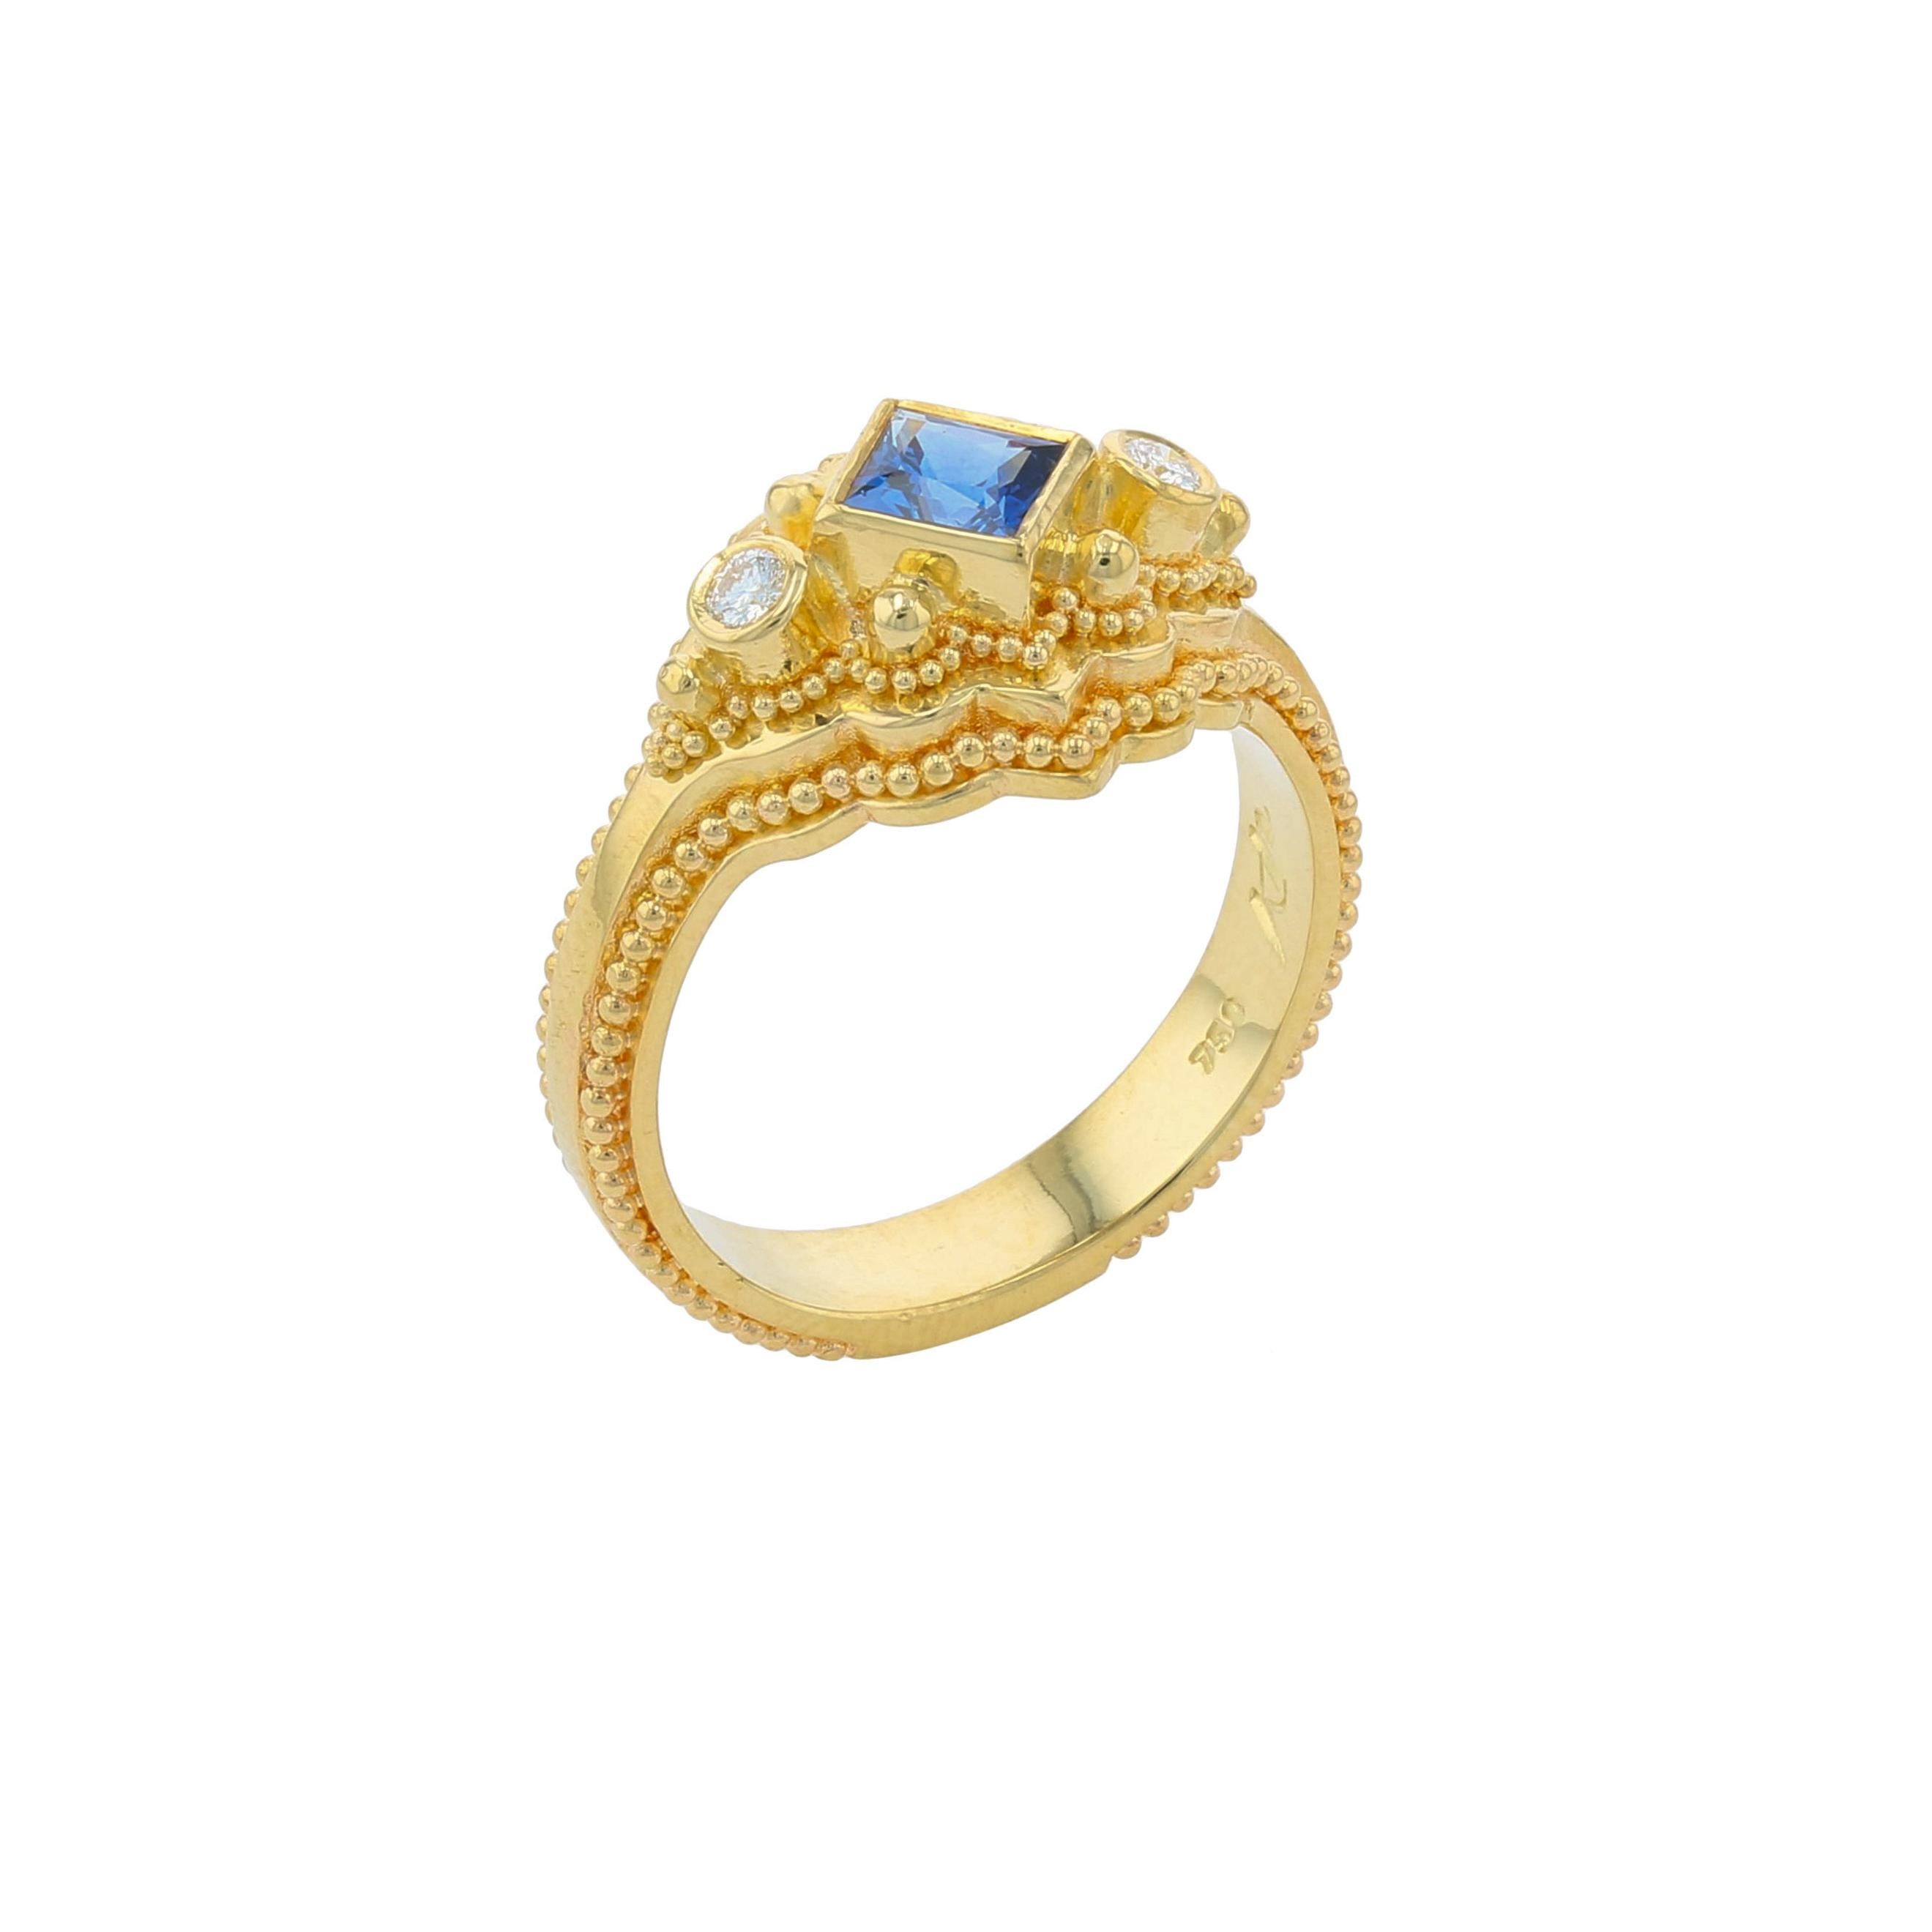 Artisan Kent Raible 18 Karat Gold Blue Sapphire and Diamond Cocktail Ring, Granulation